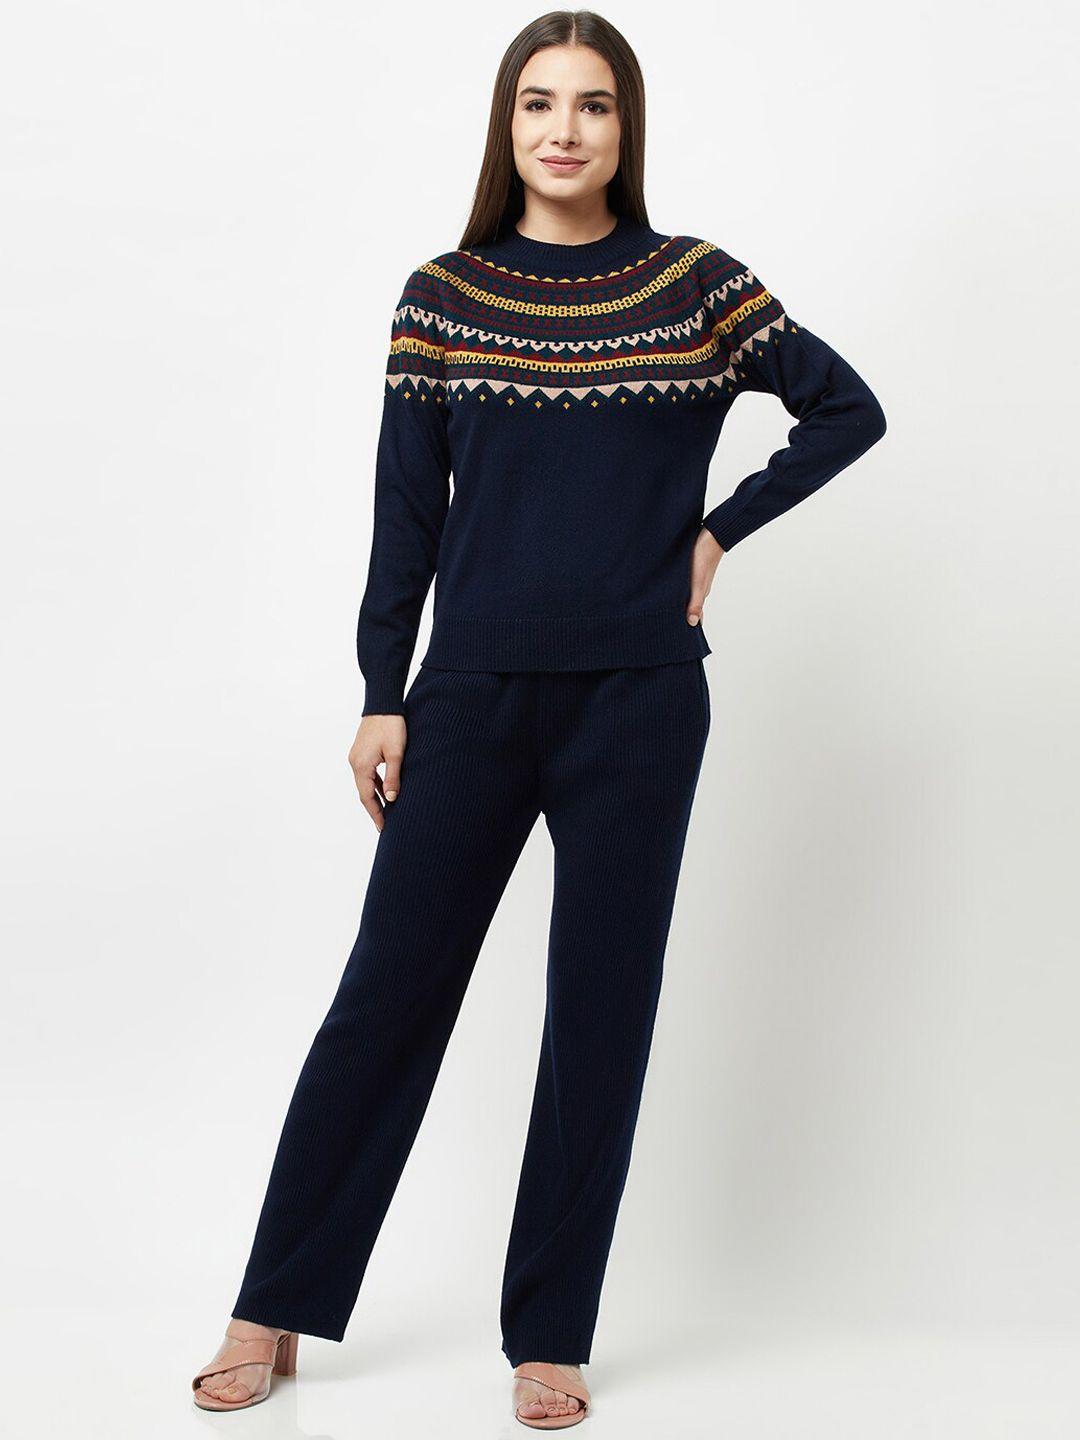 knitstudio self design sweatshirt & trackpants co-ord